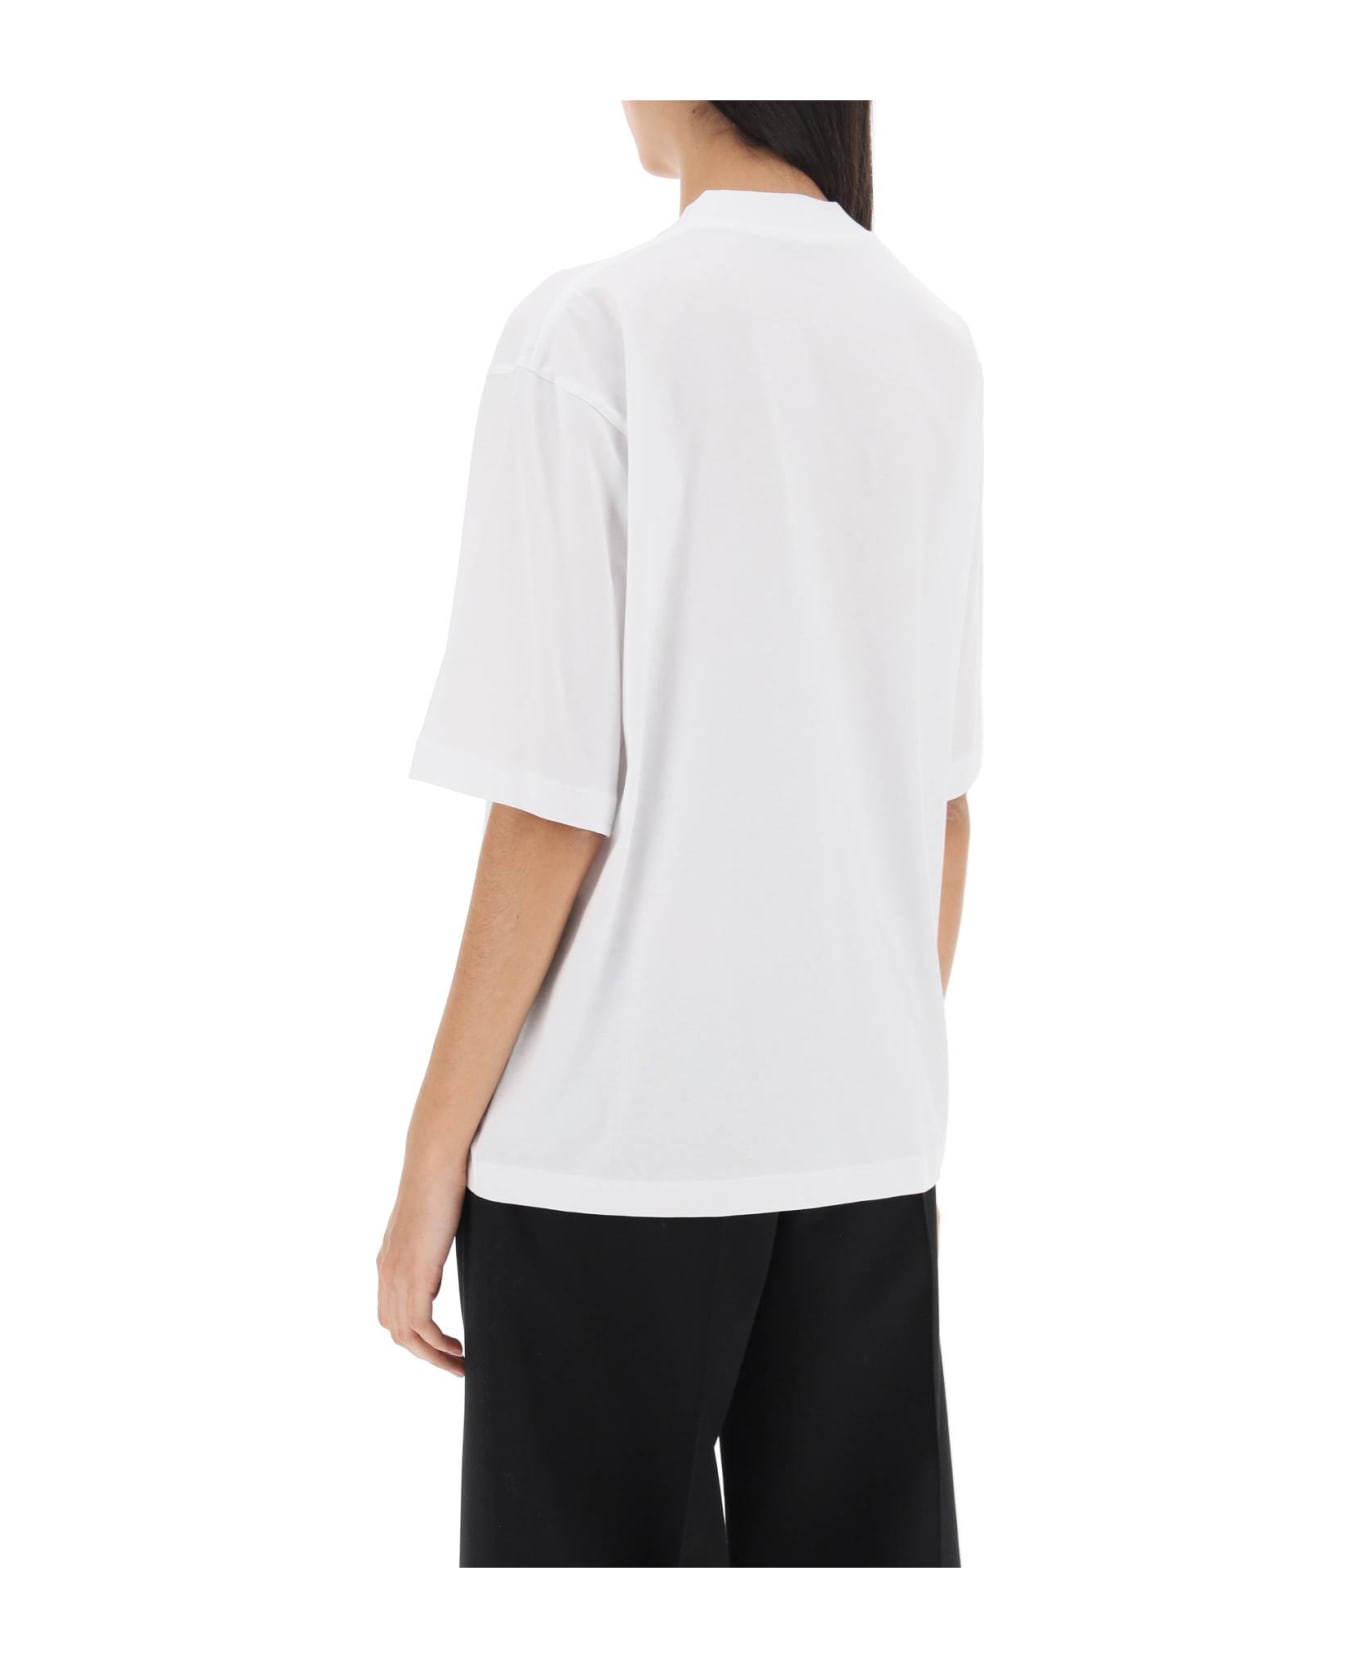 Marni Regular Chest Logo T-shirt - White